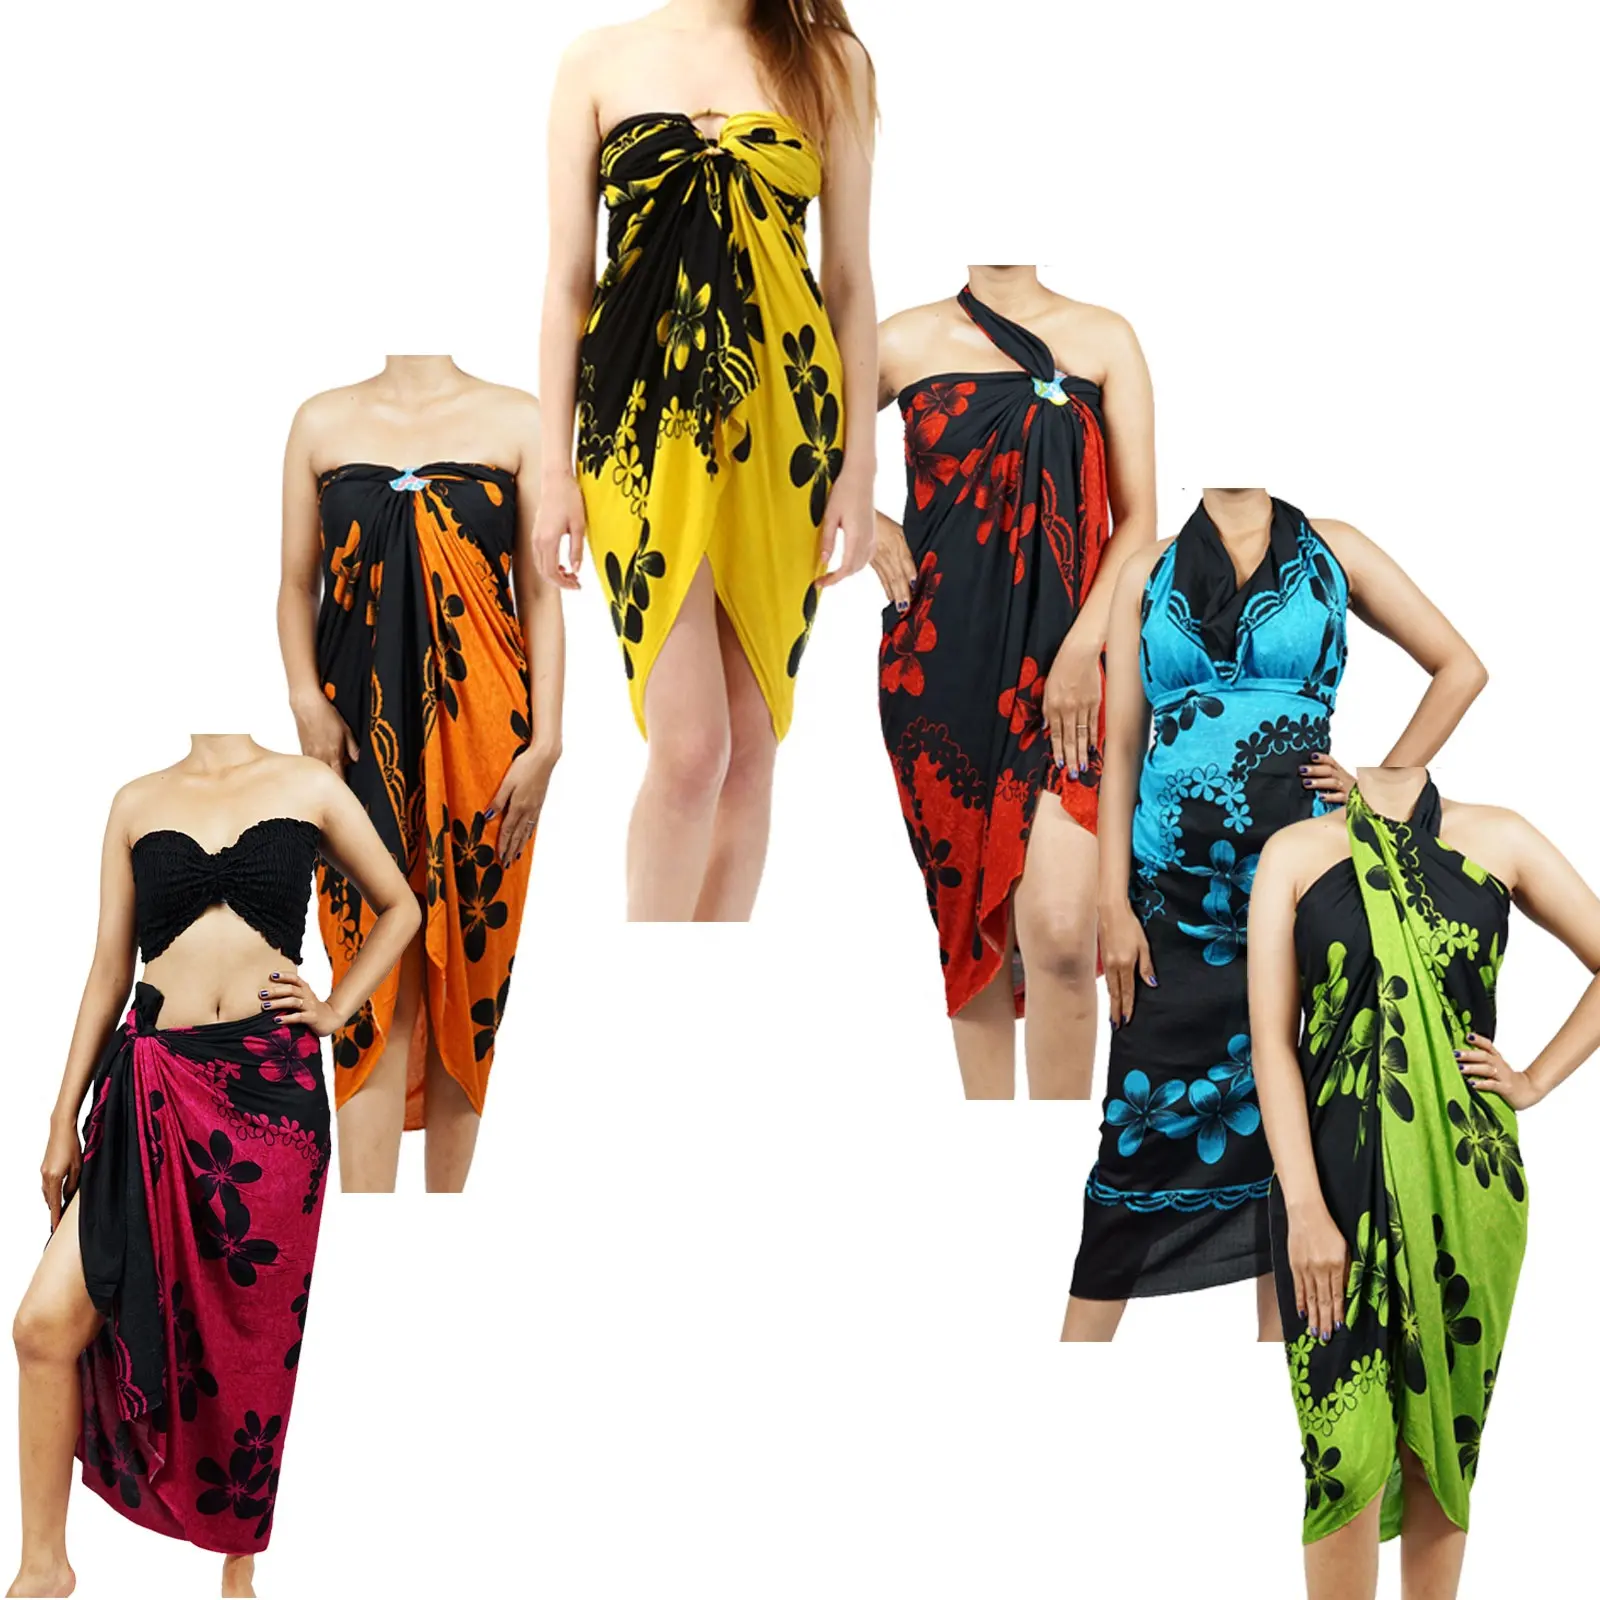 Latest design floral printed pareo beach dress 100% rayon sarong bikini swimwear cover up from Indonesia